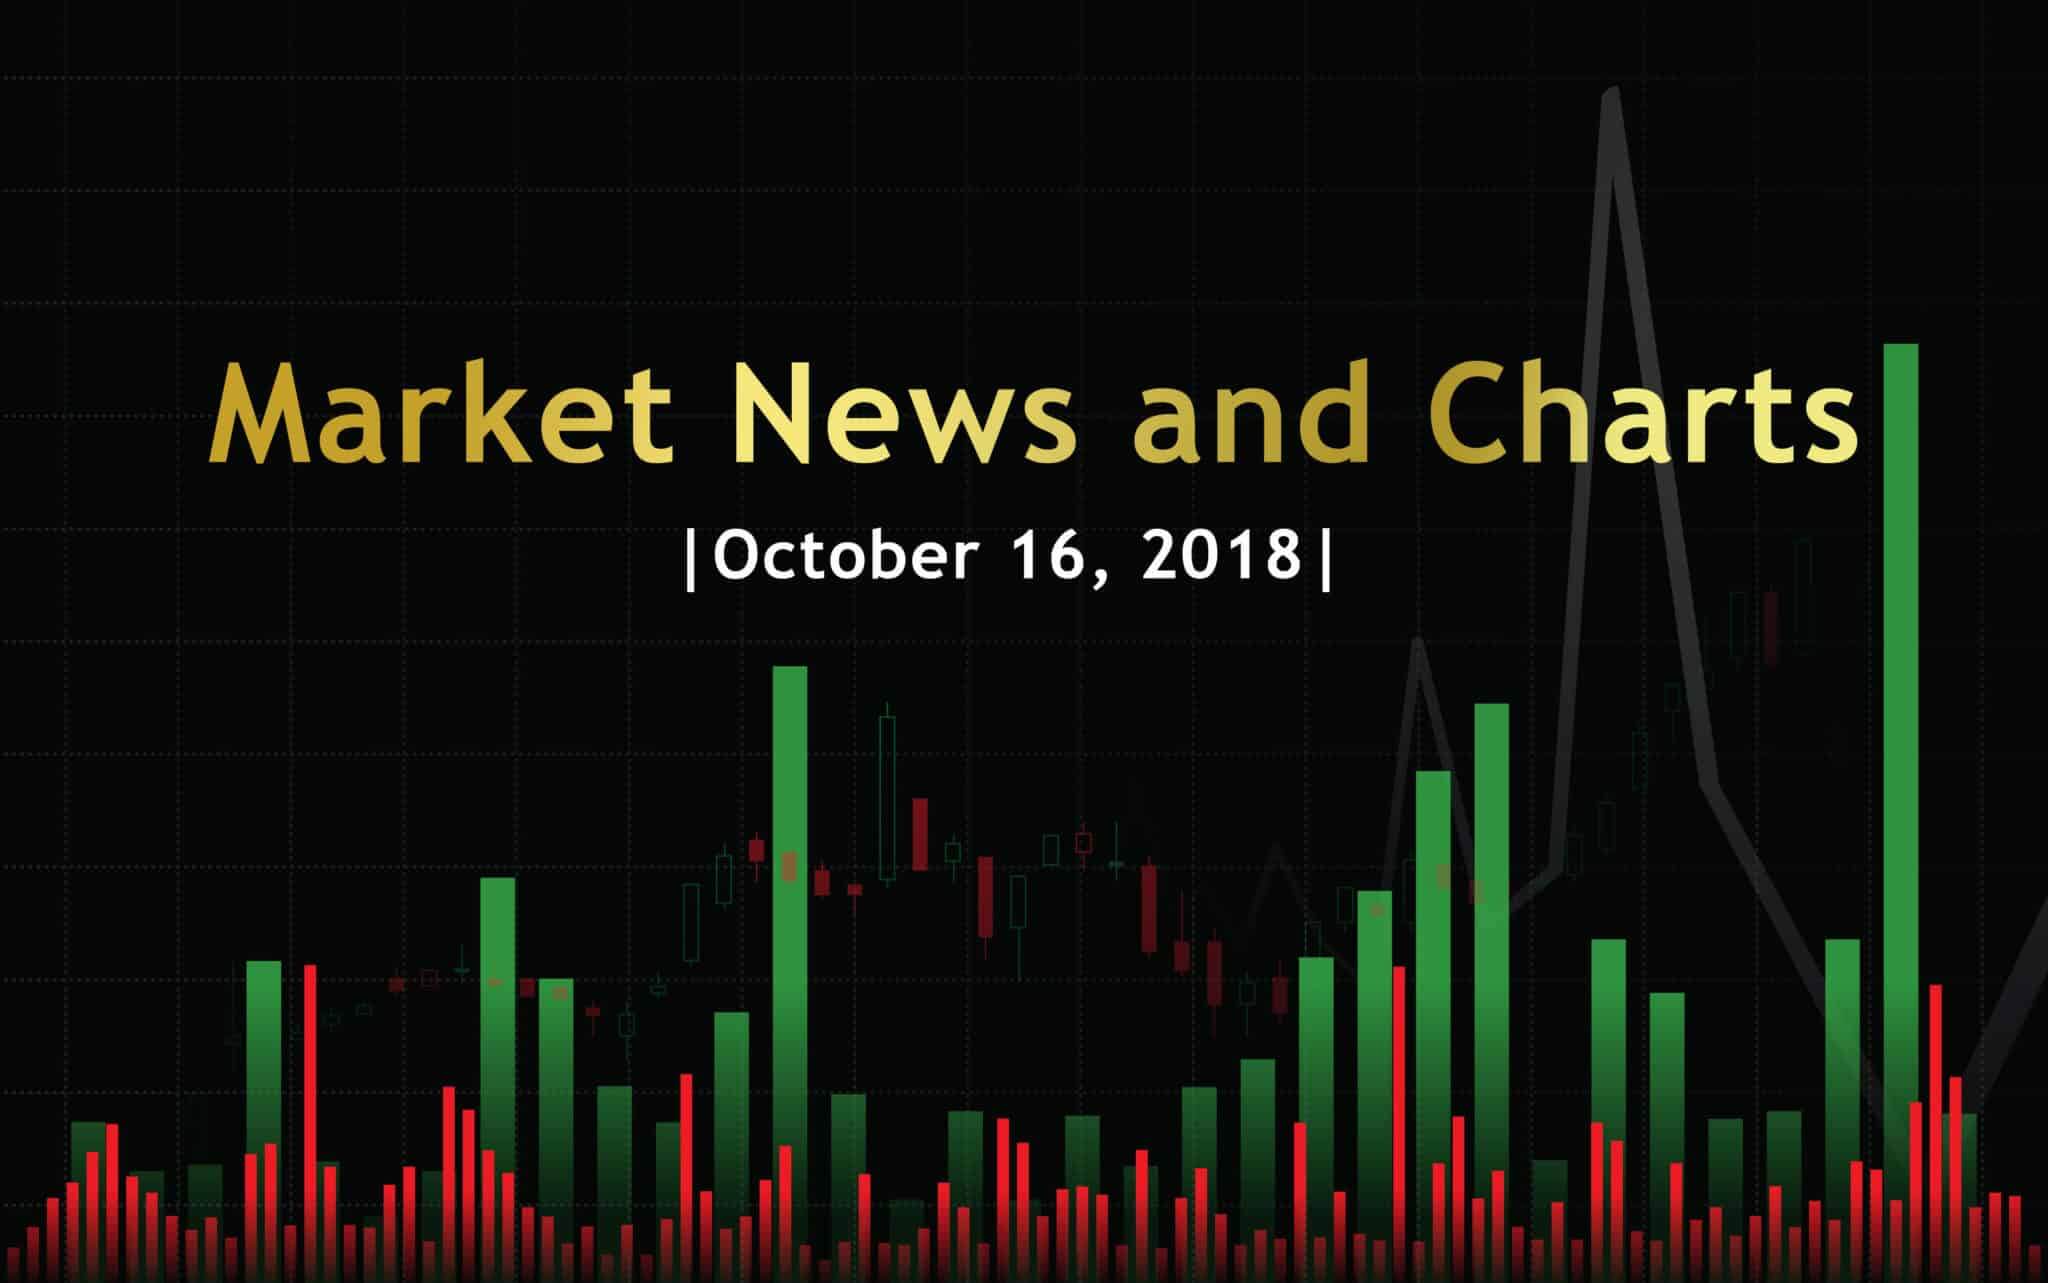 FinanceBrokerage - Market News and Charts for October 16, 2018